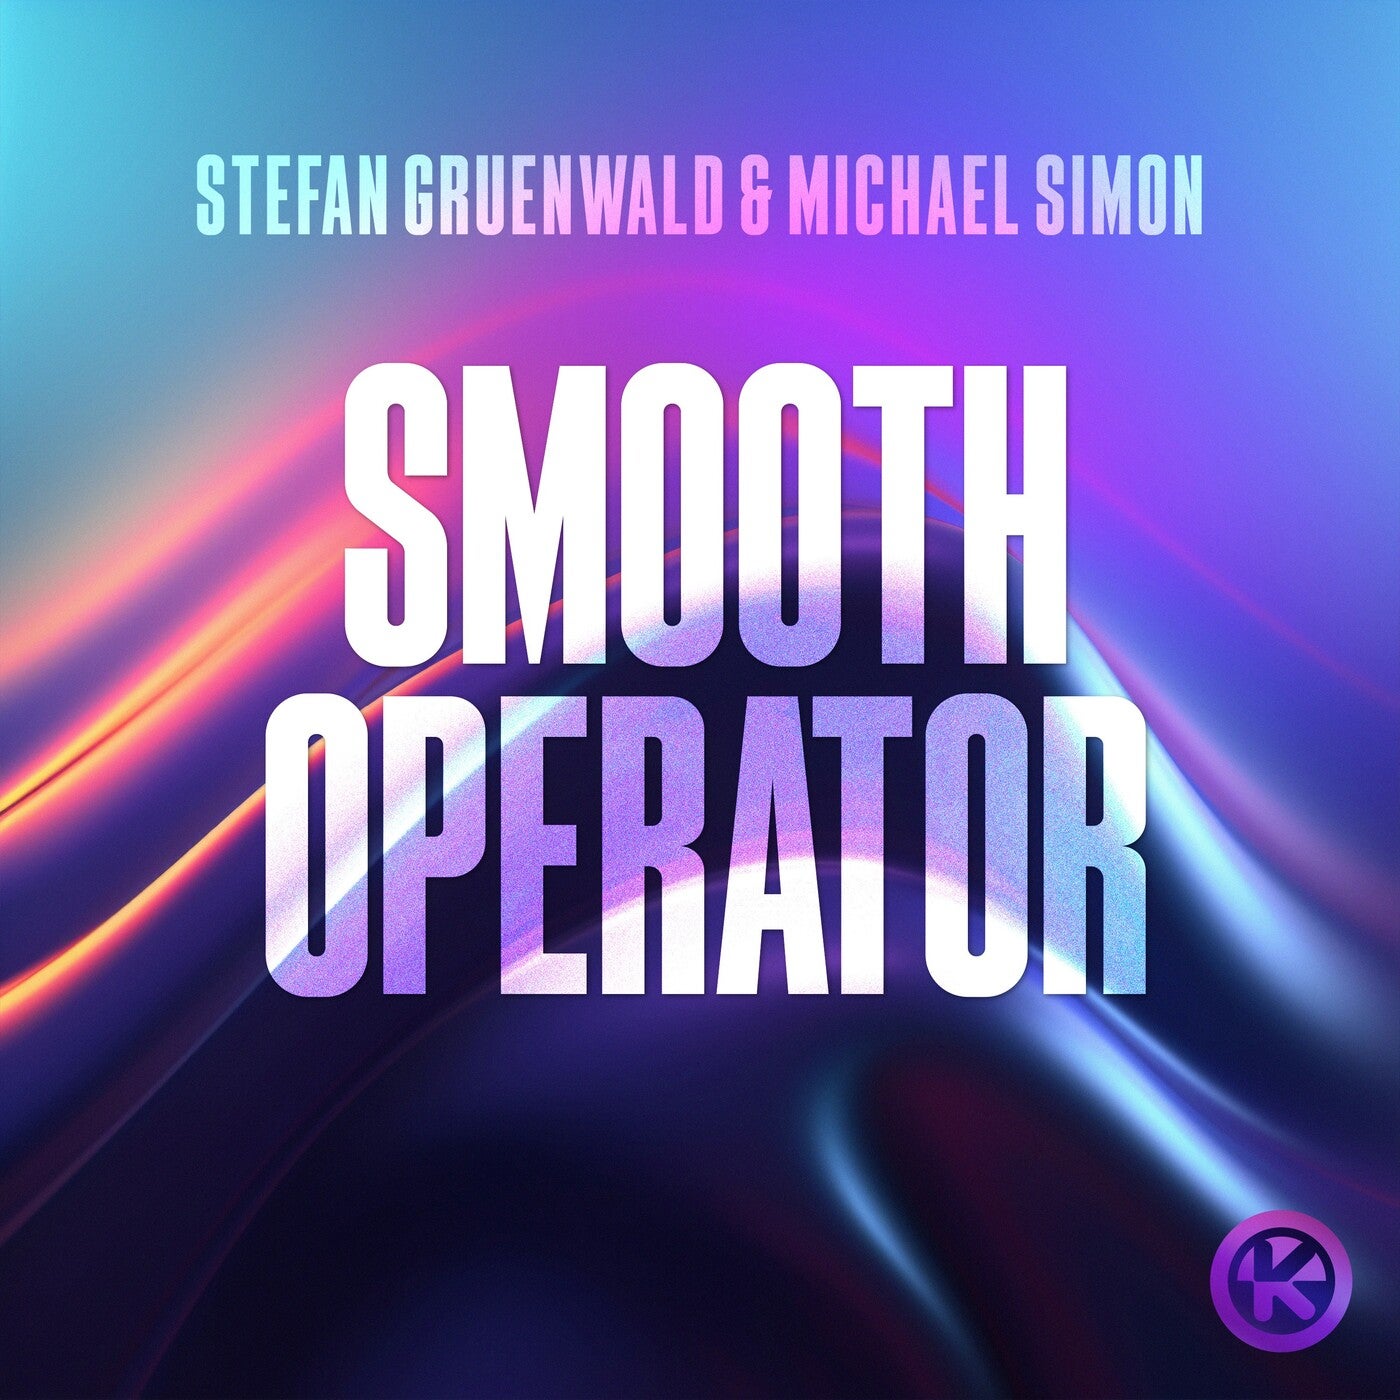 Smooth Operator